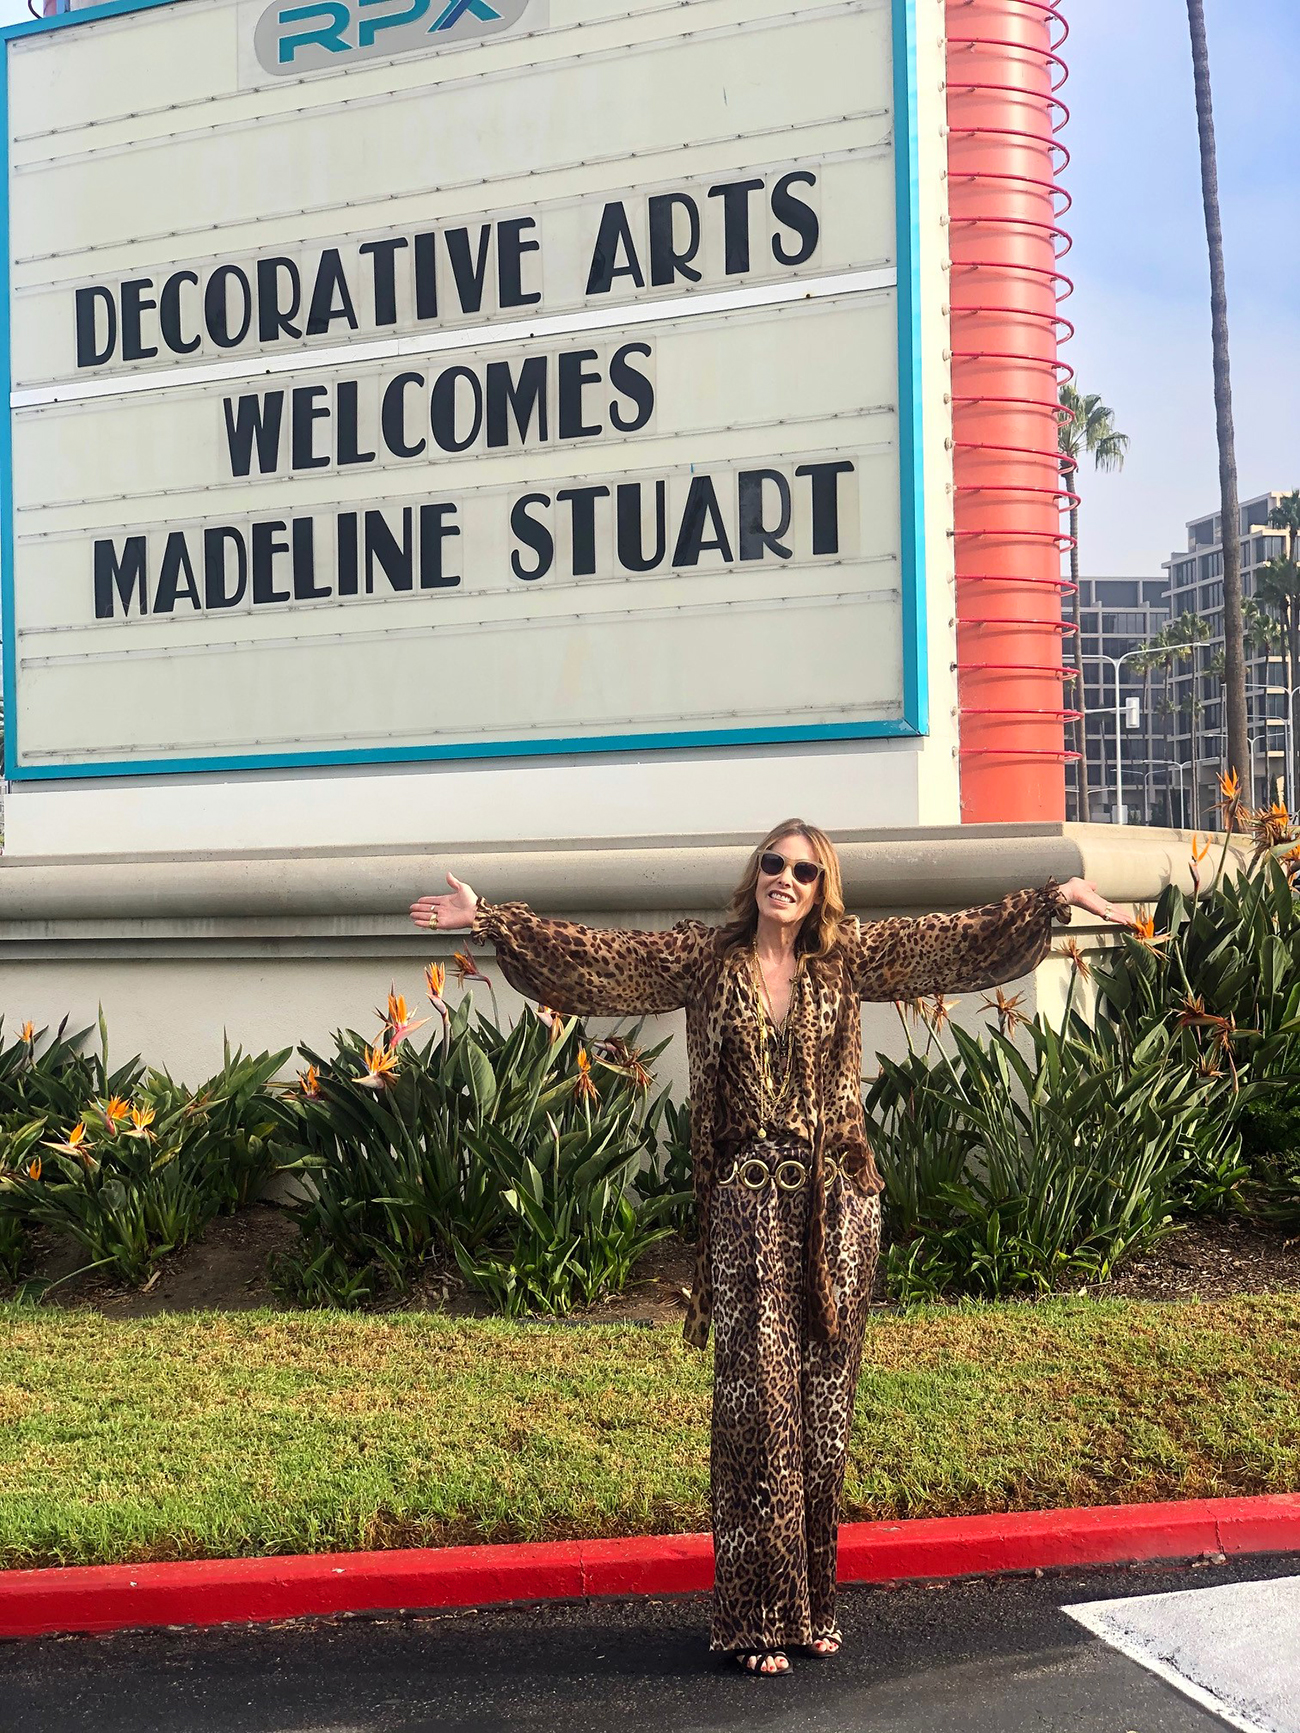 Decorative Arts Society in Newport Beach